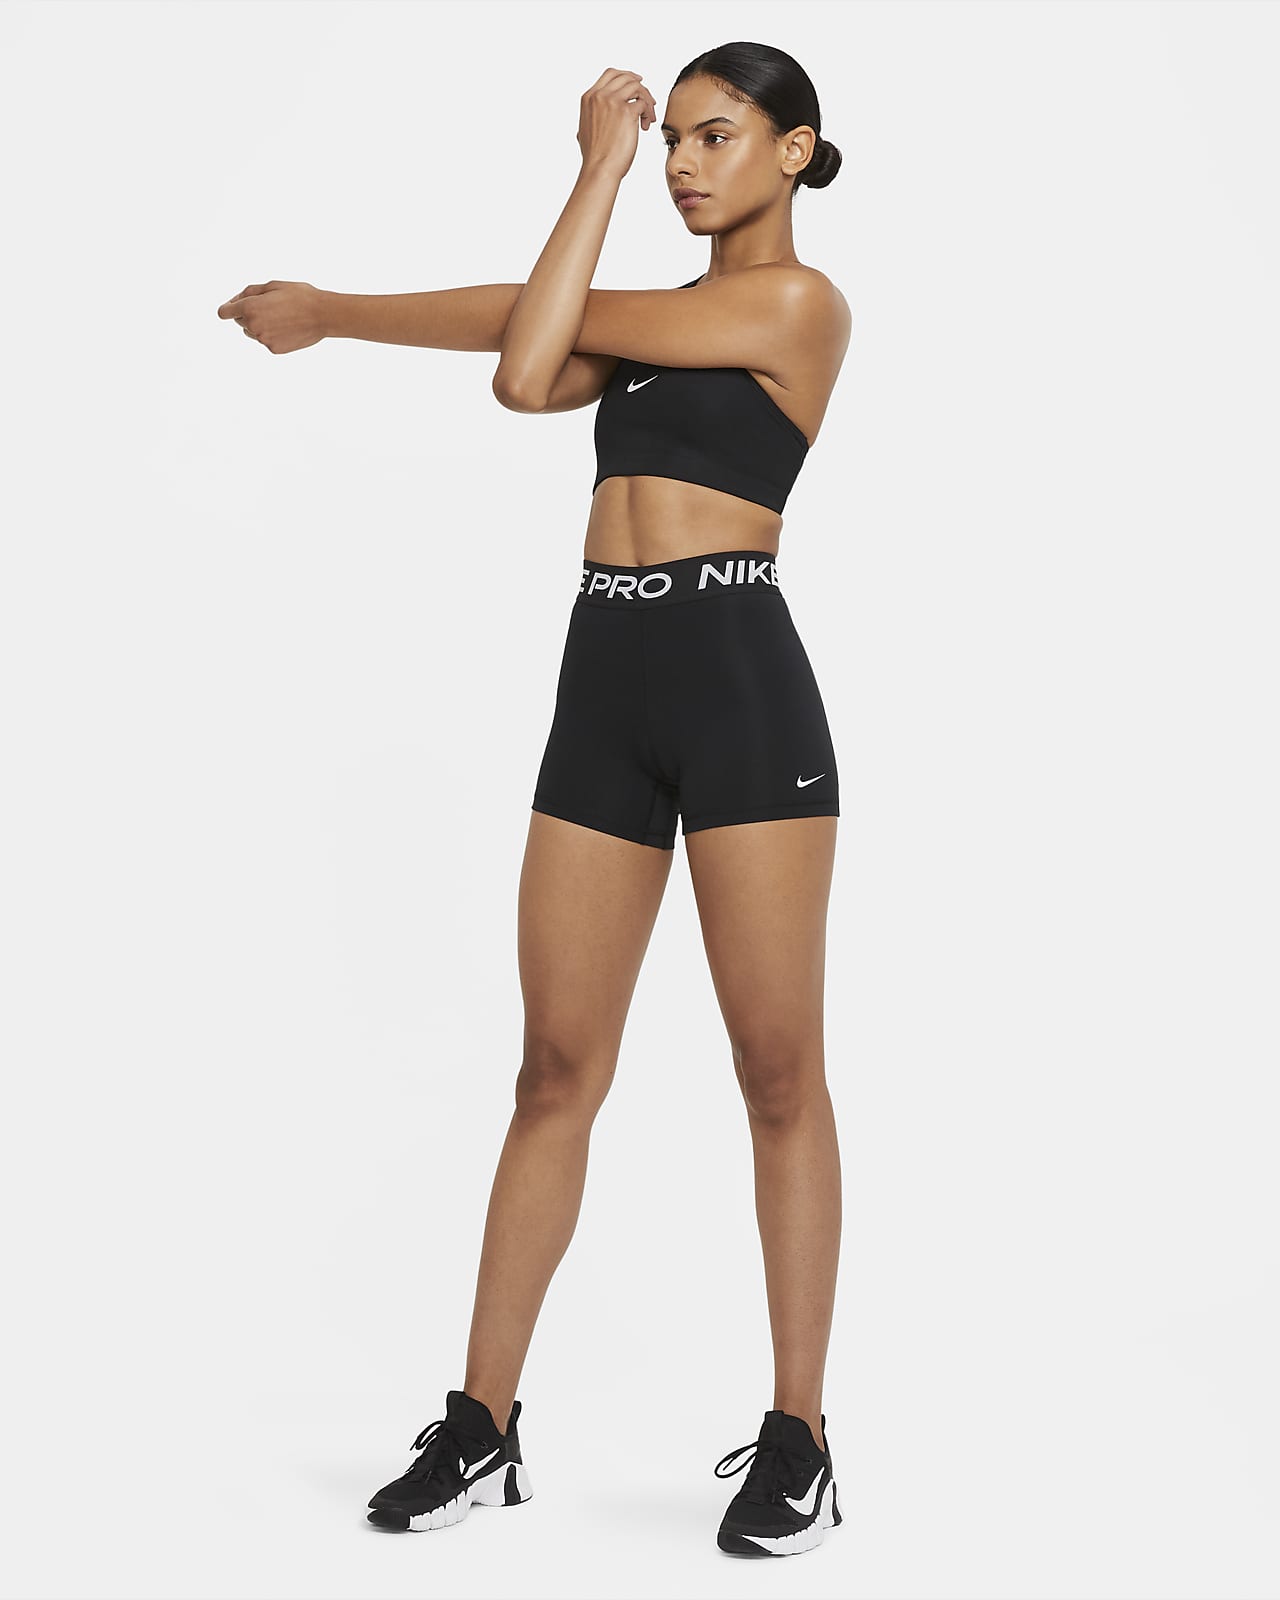 Corbata Náutico Señal Nike Pro 365 Women's 13cm (approx.) Shorts. Nike IN